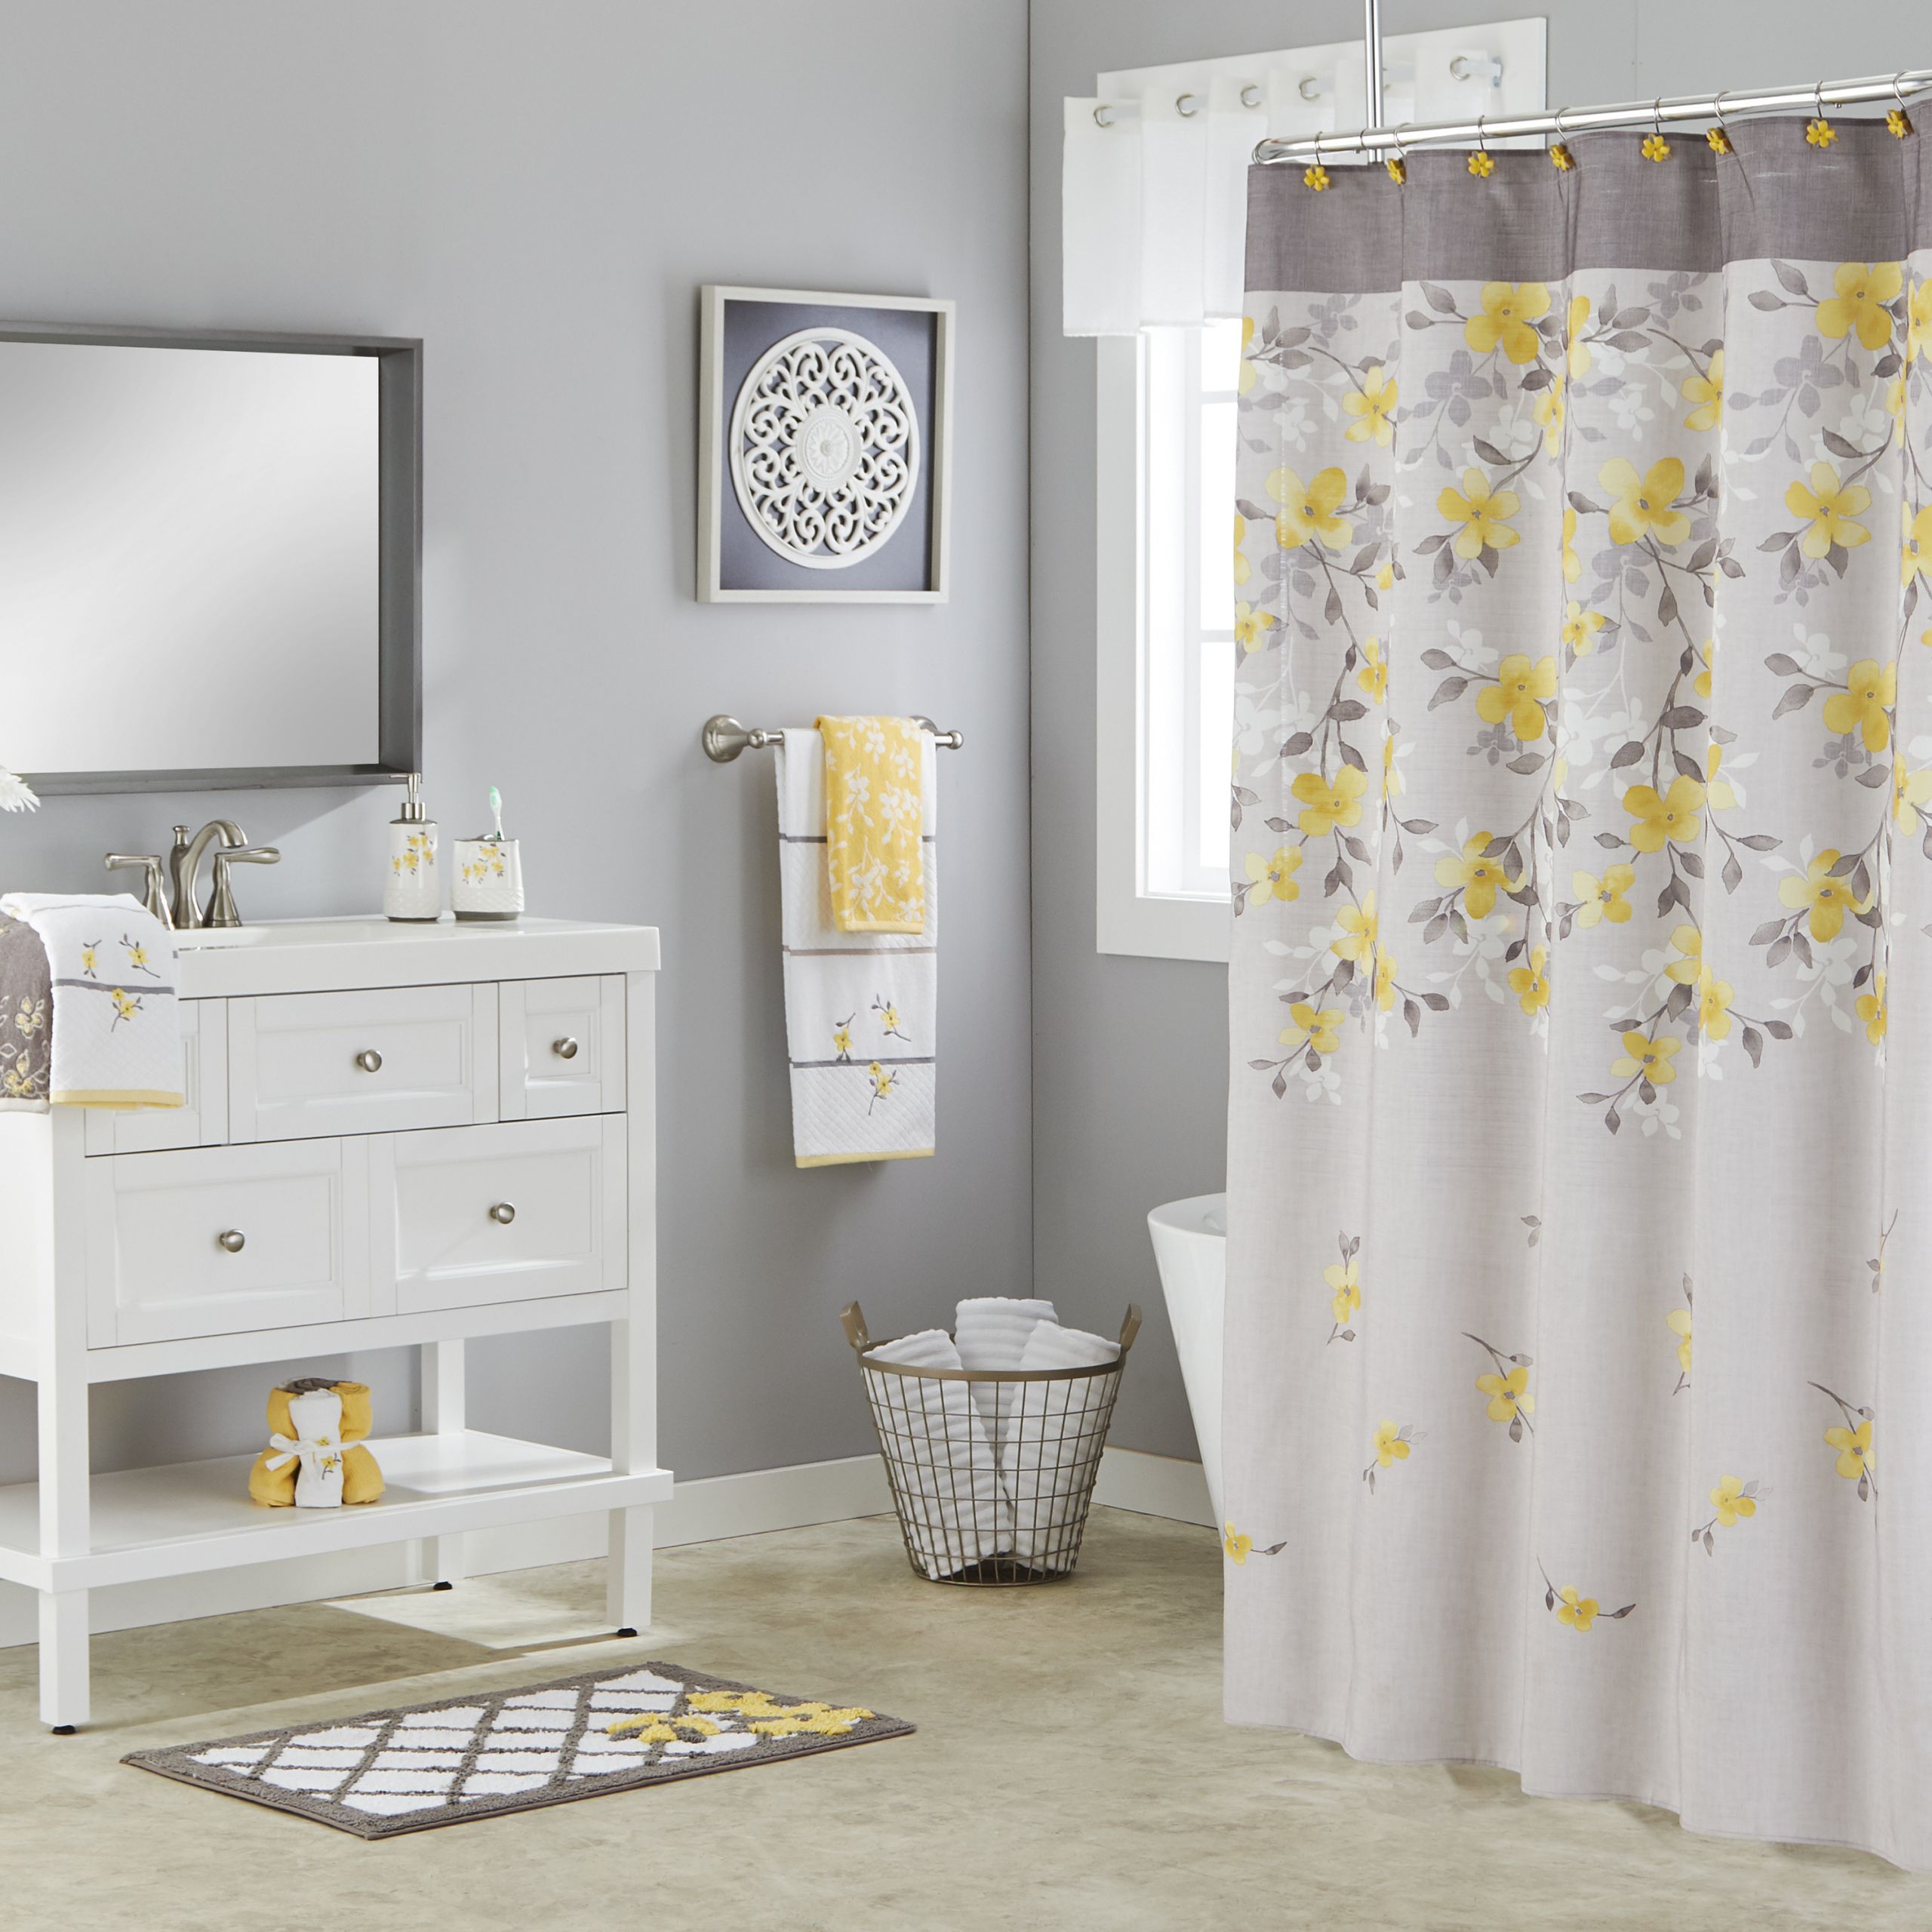 Bathroom Shower Curtain Sets
 Shower Curtain Sets Walmart